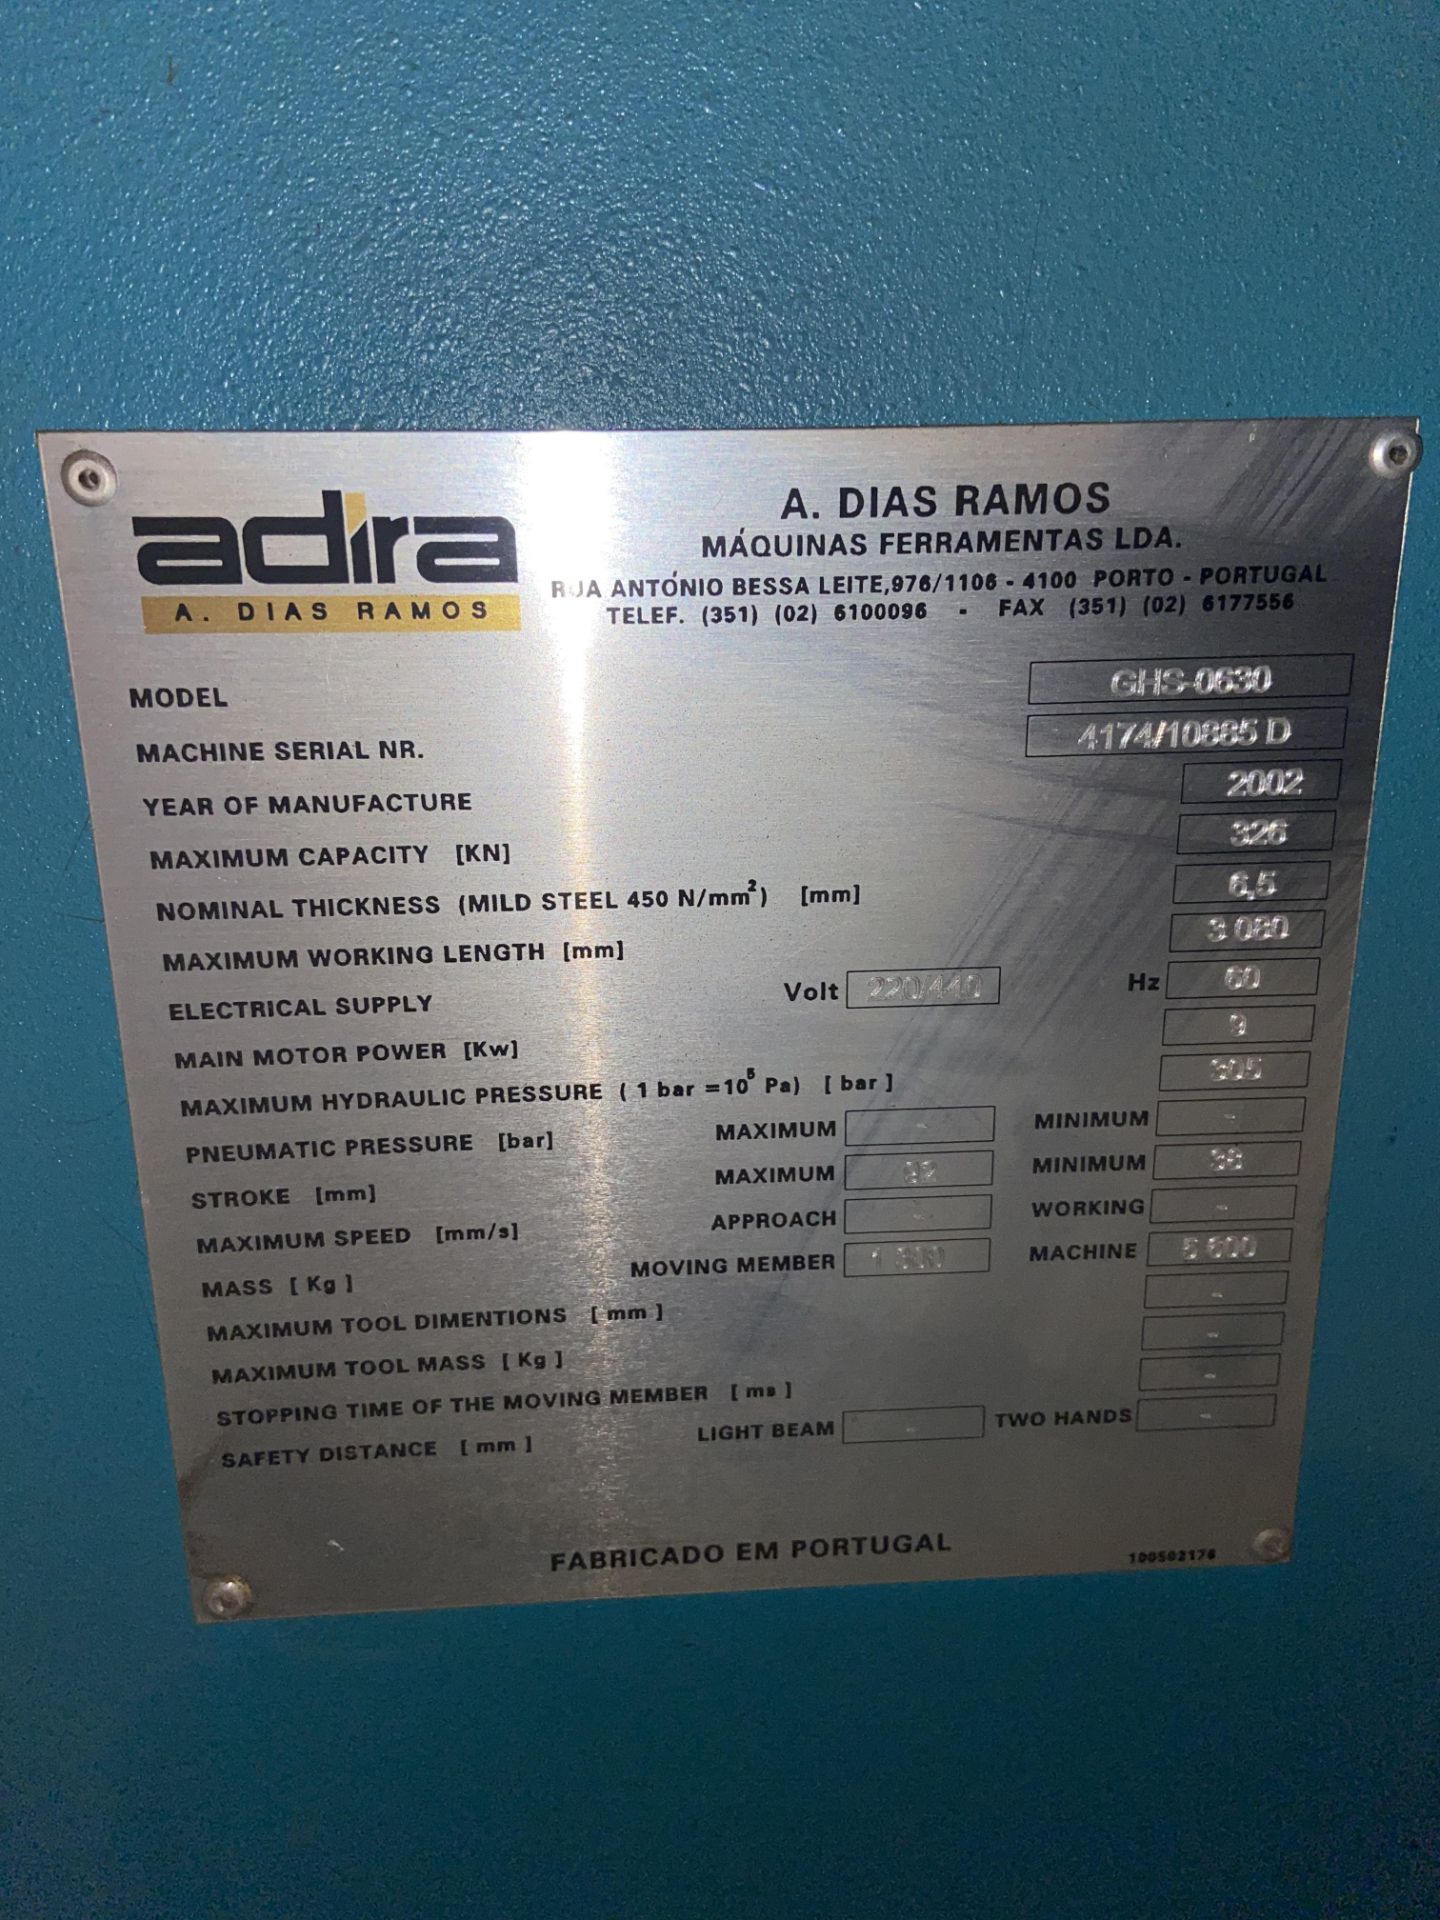 Adira A. Dias Ramos 326 (KN) Capacity Shear, M/N GHS-0630, S/N 4174/10885 D, Year of Manufacturer: - Image 8 of 12